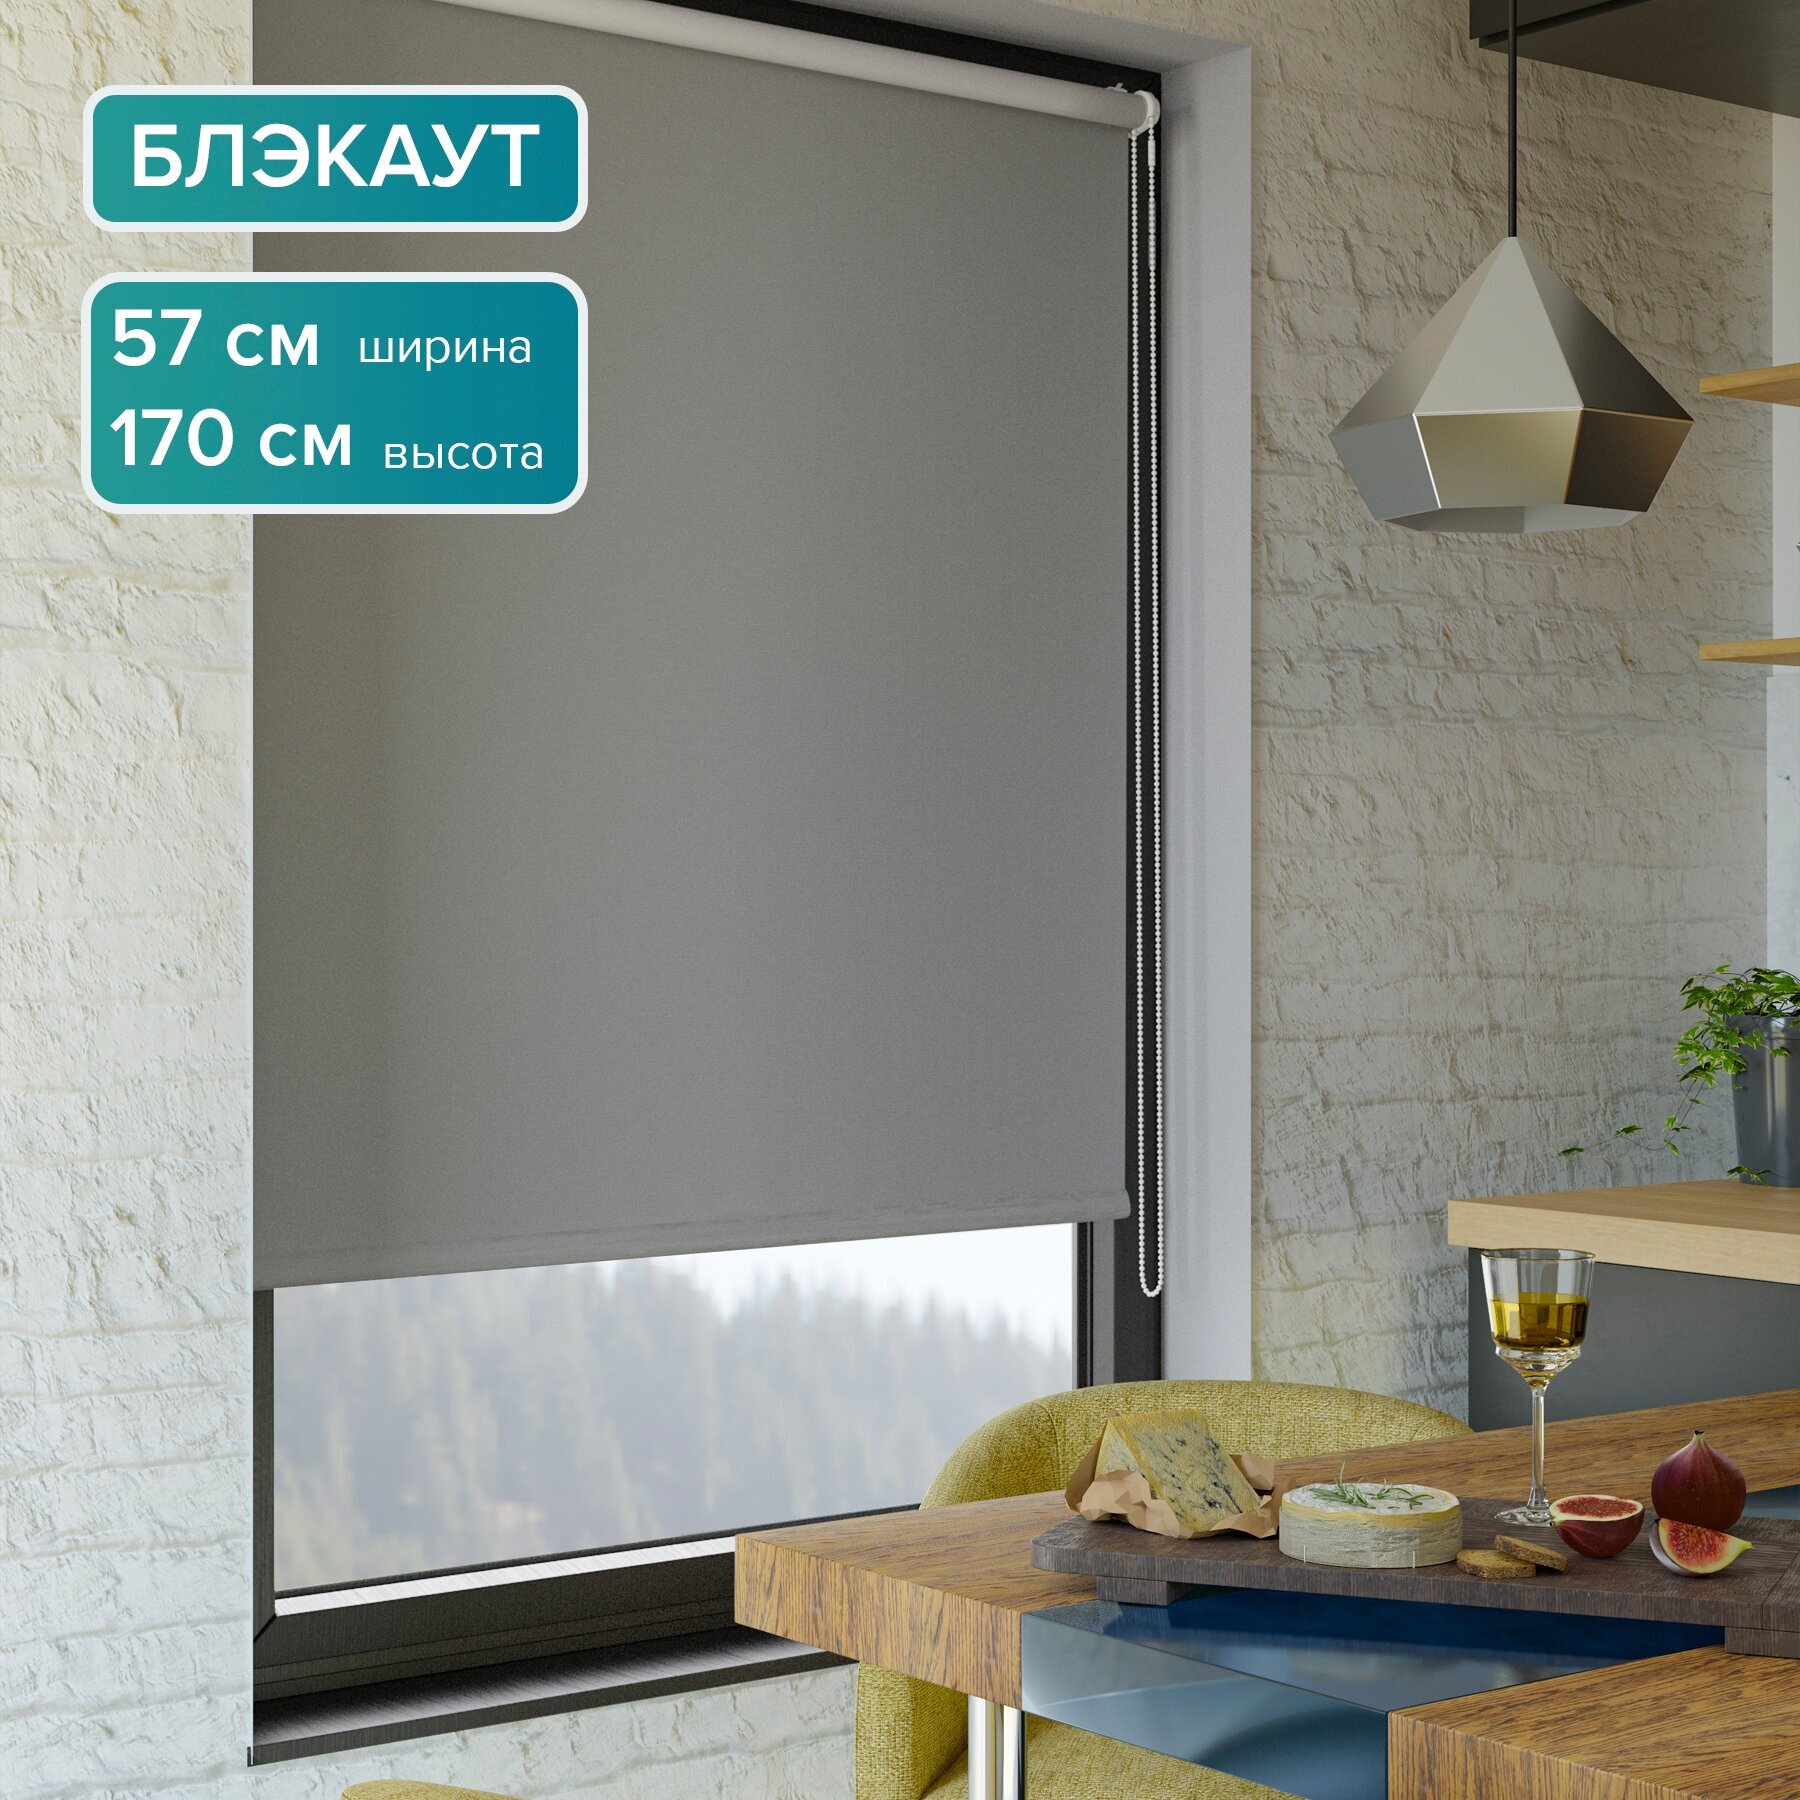 Рулонные шторы PIKAMO светонепроницаемая 57*170 см, цвет: серый, Блэкаут / Blackout рулонные шторы для комнаты для кухни для спальни